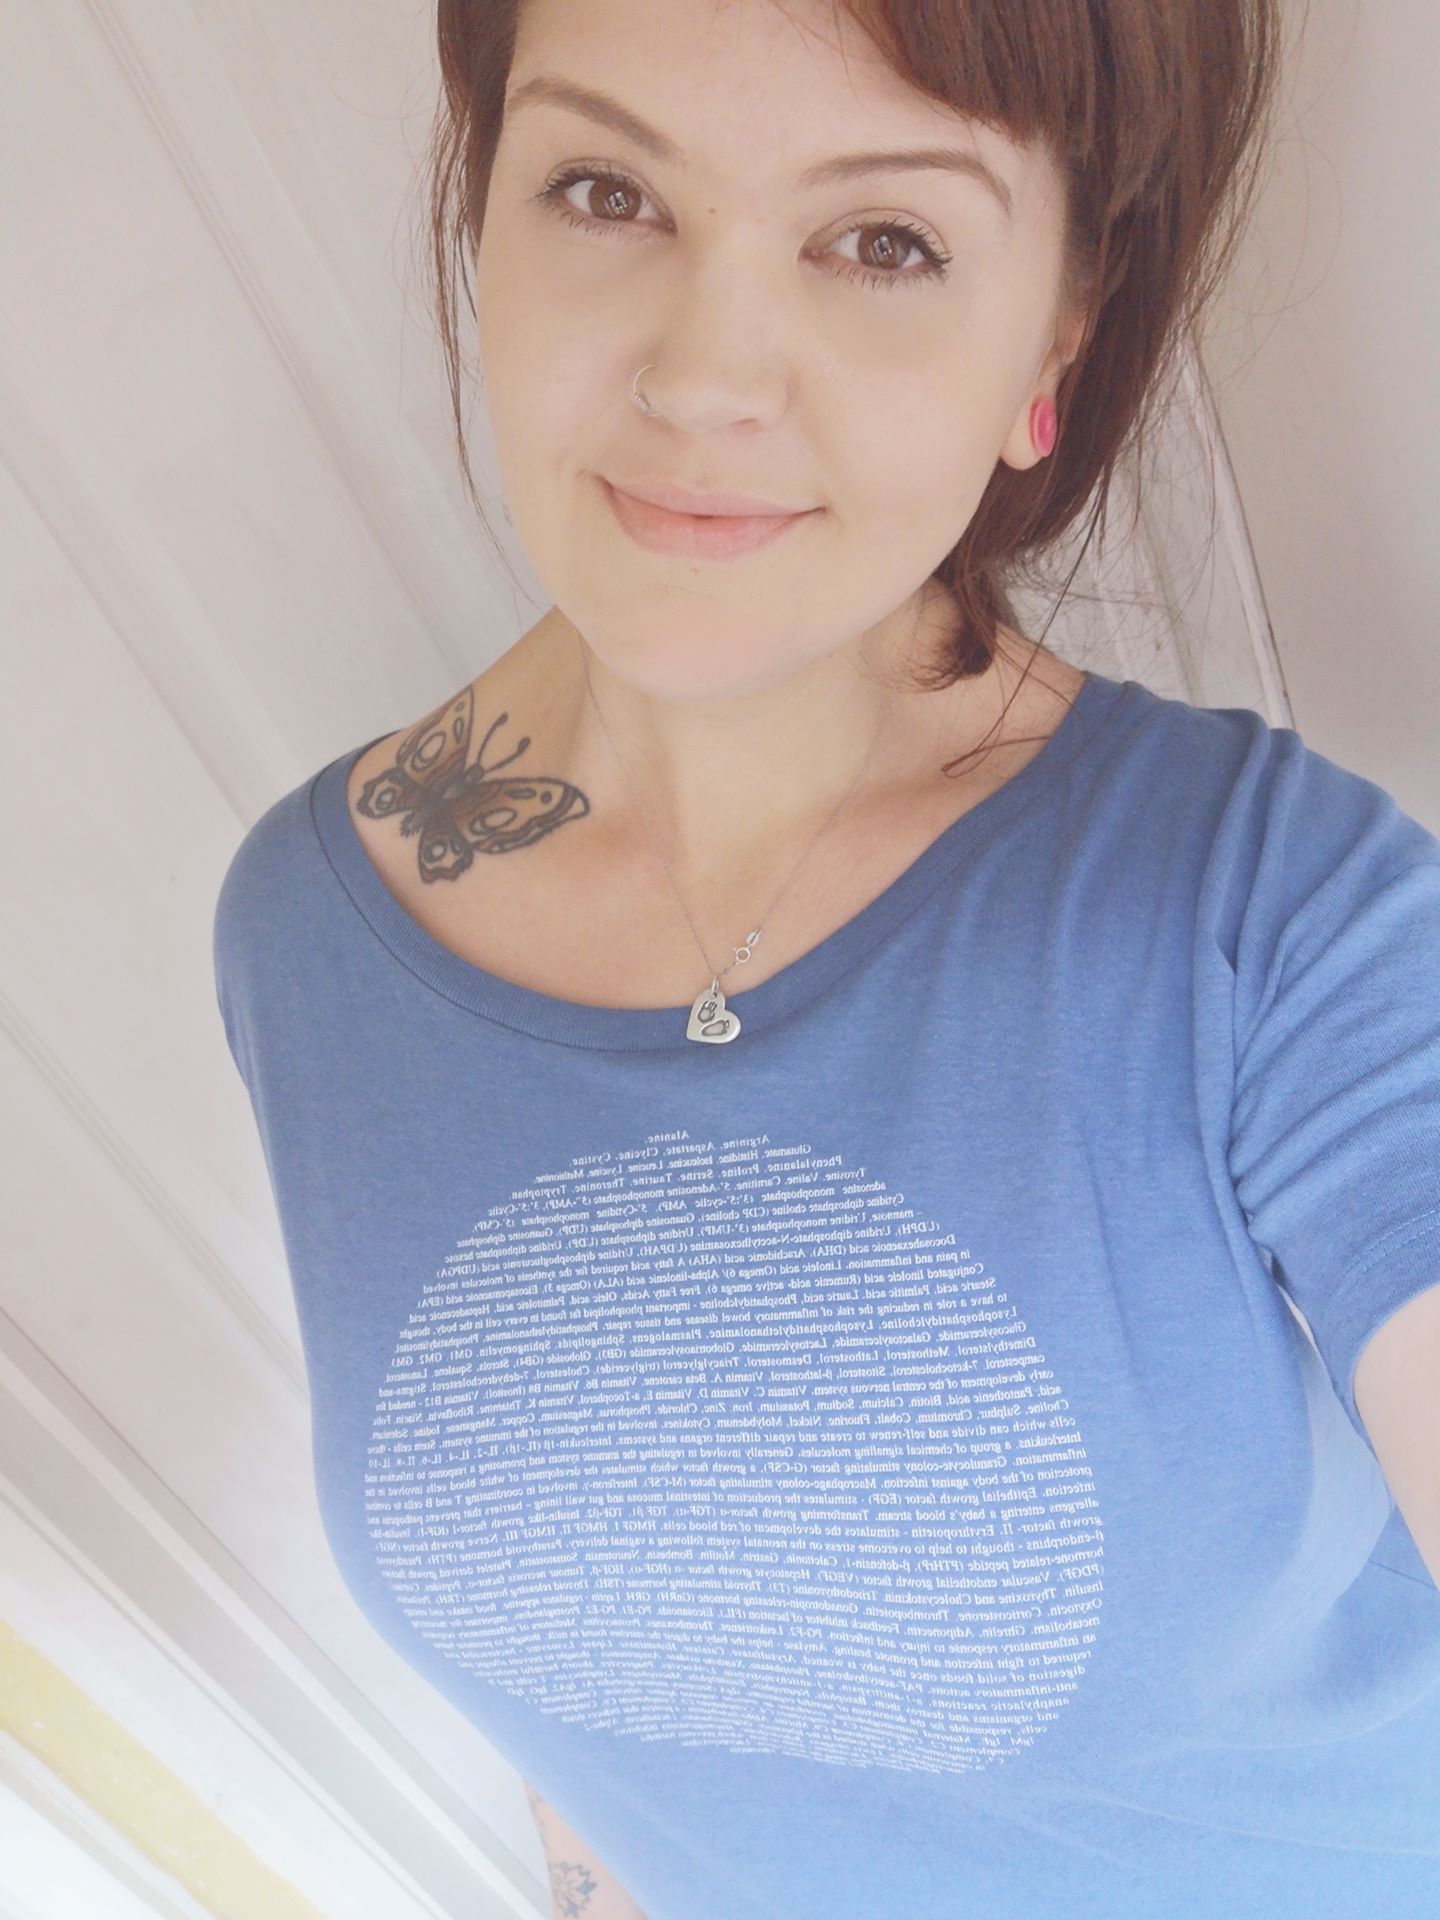 Top for Breastfeeding & Beyond, Human Milk Blue Moon T-Shirt